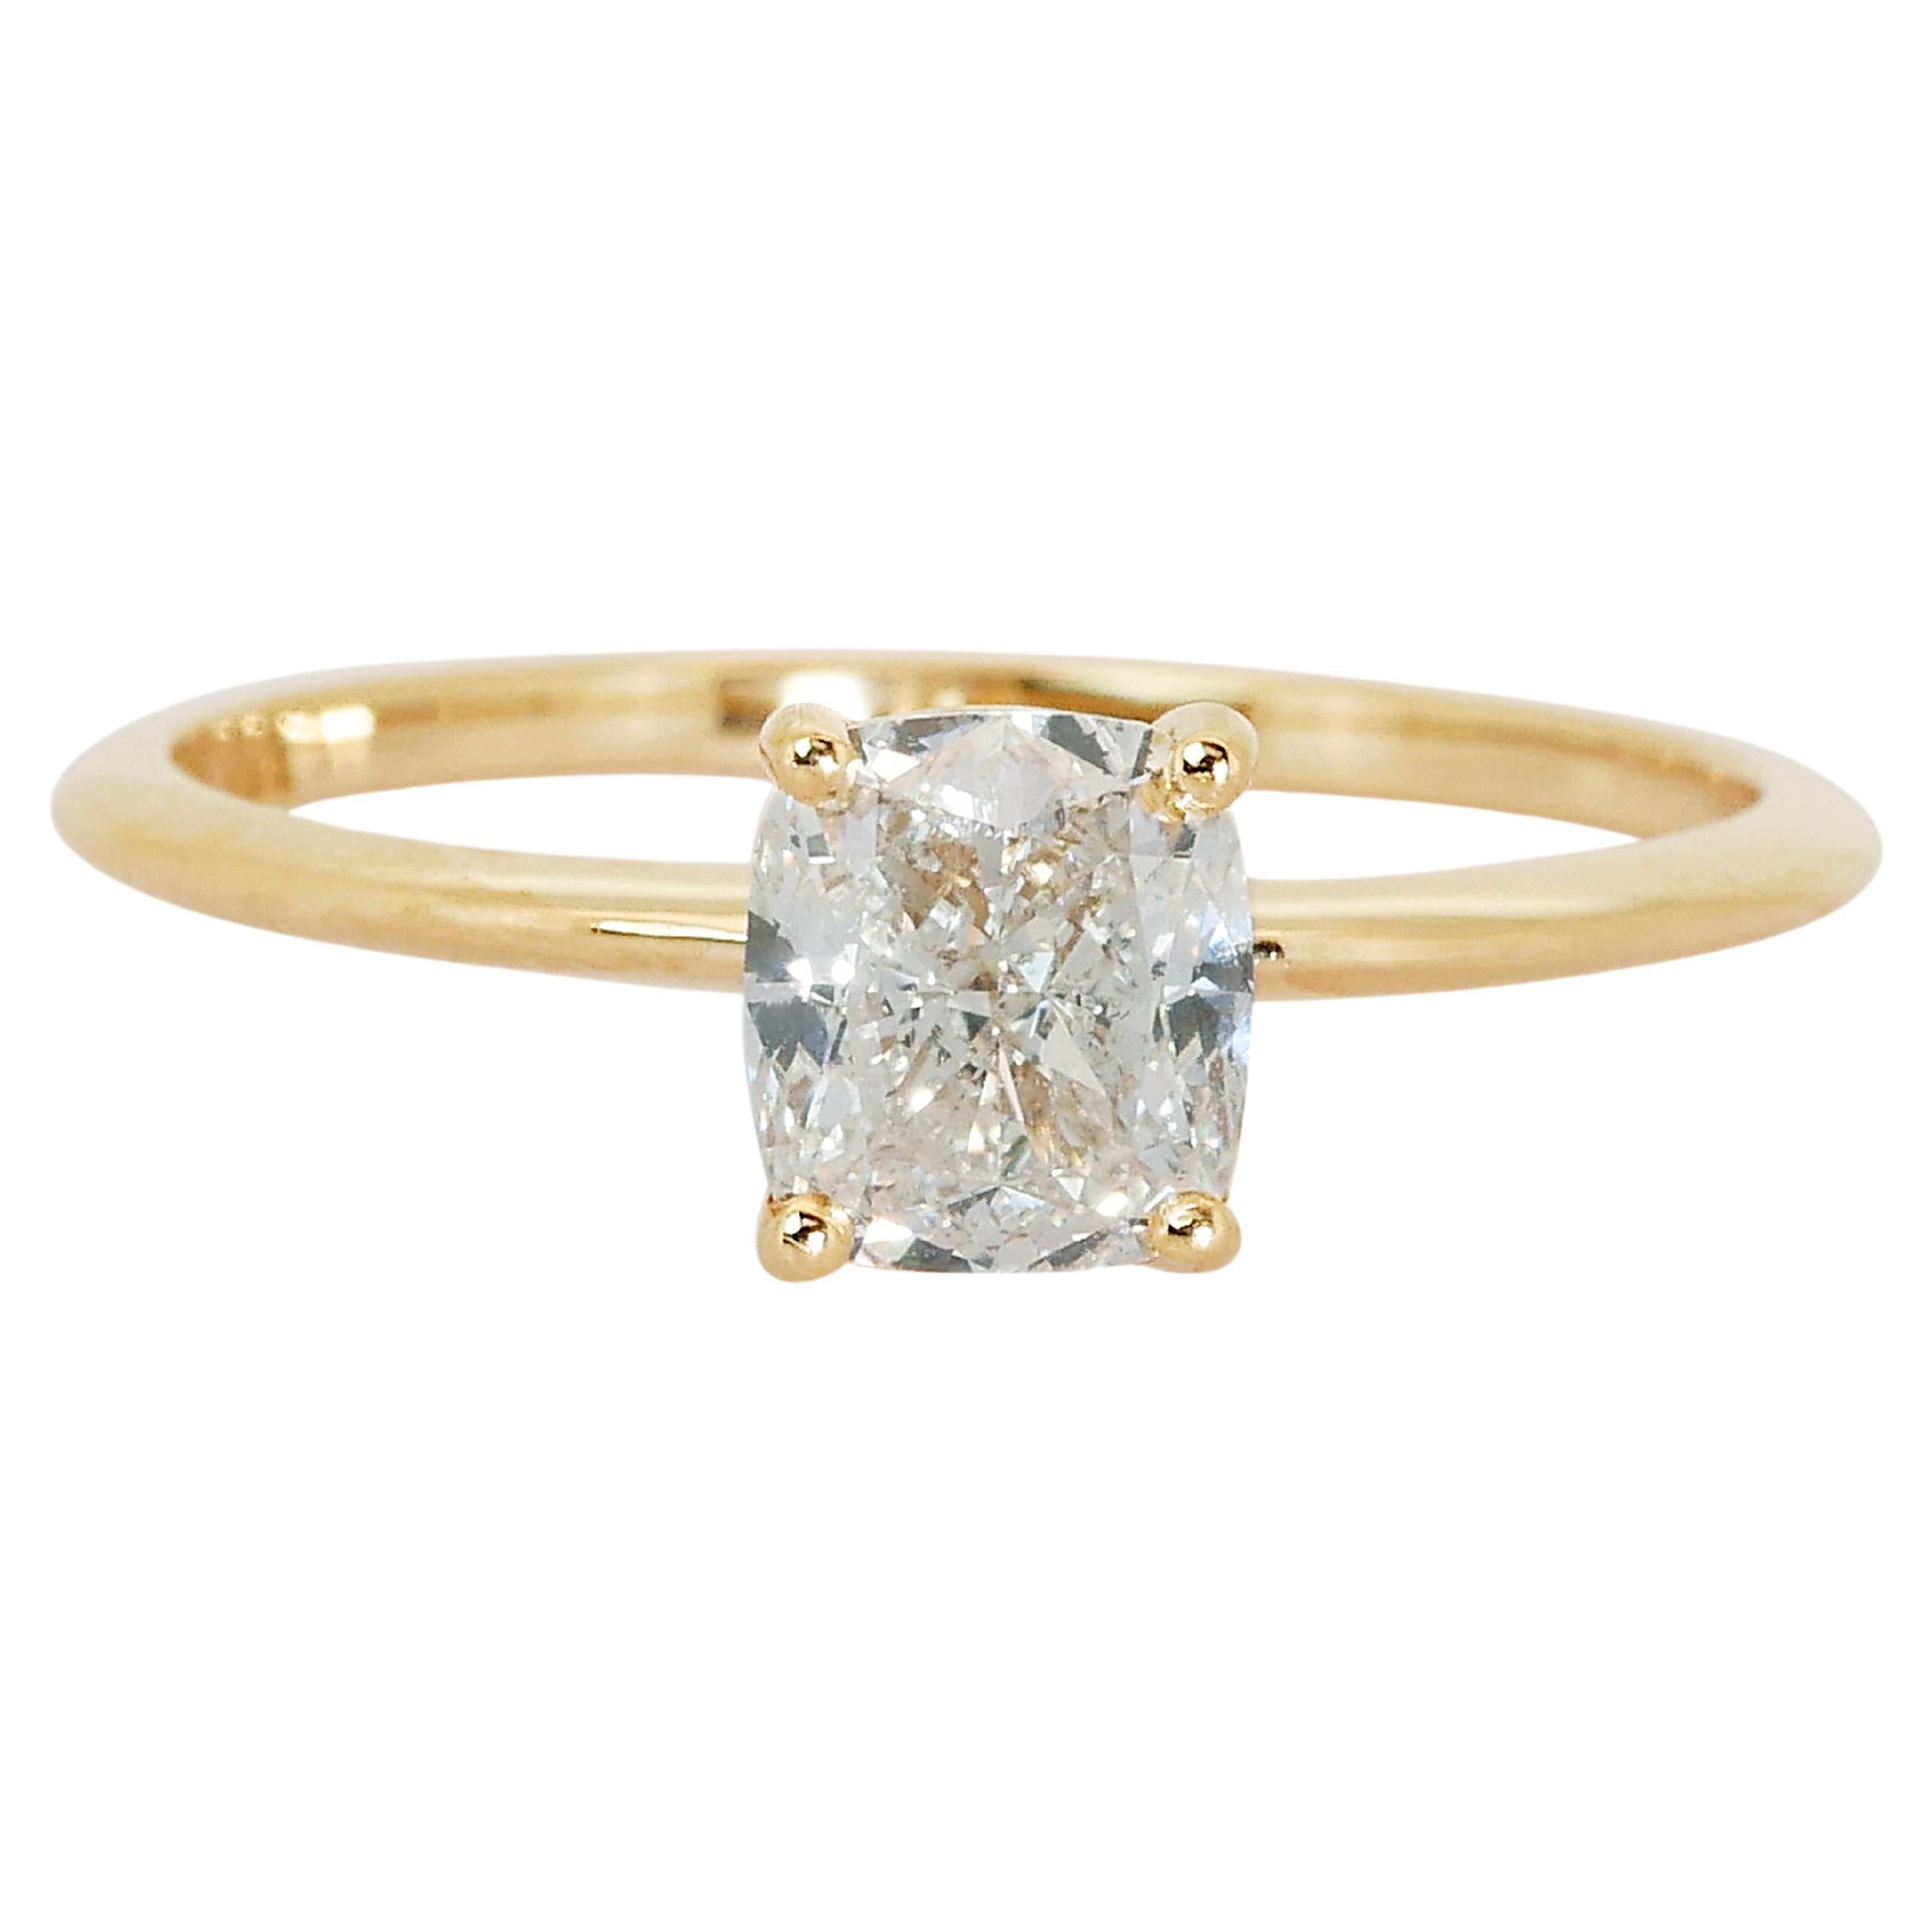 Glamorous 18k Yellow Gold Solitaire Ring w/ 1.02 Carat Natural Diamonds IGI Cert For Sale